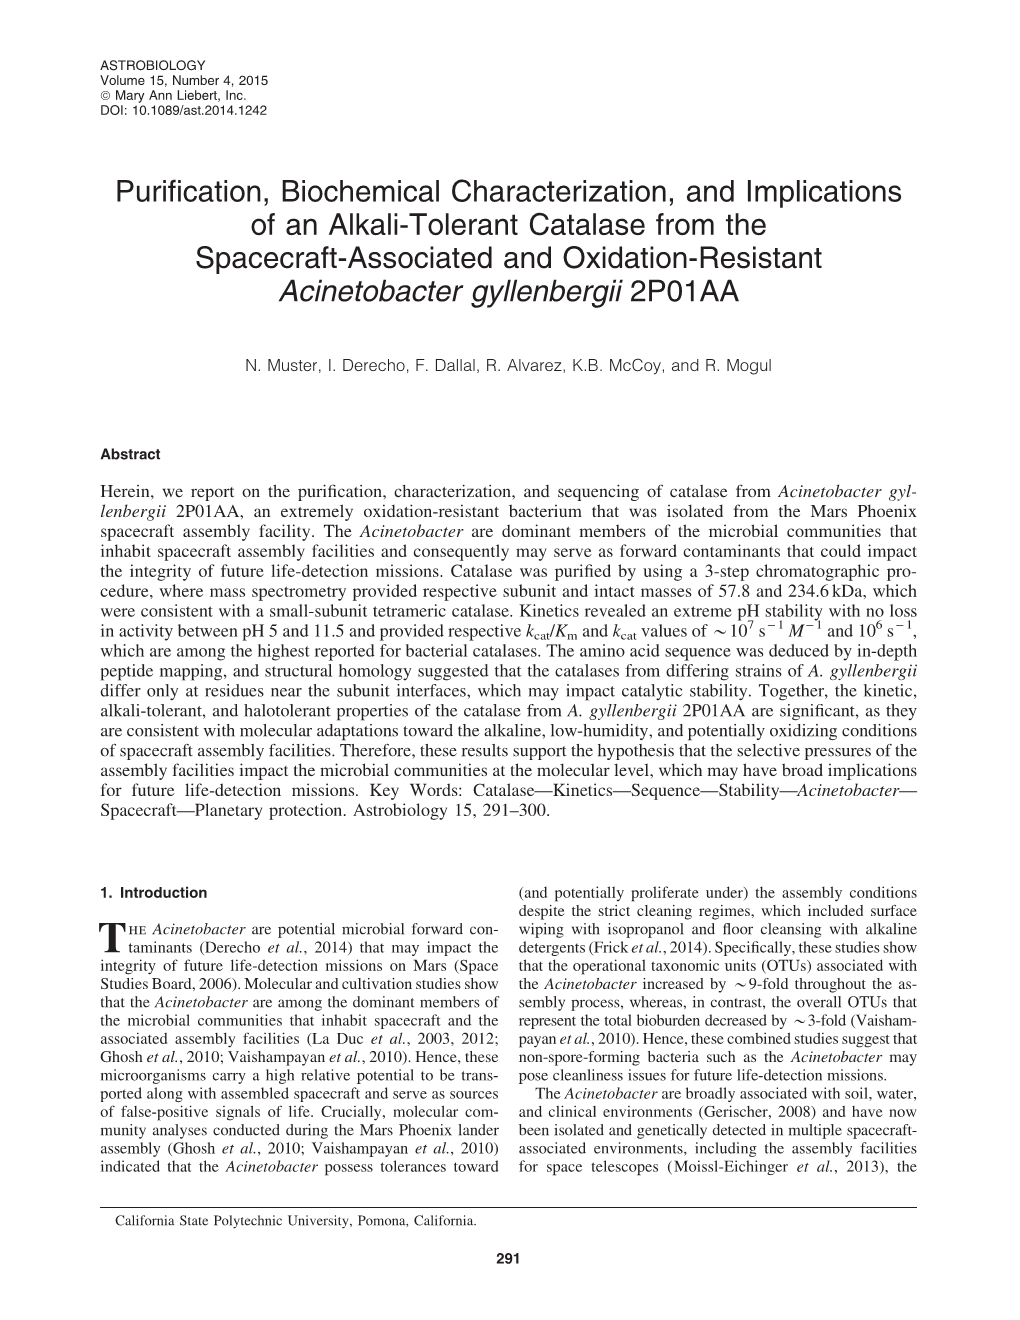 Purification, Biochemical Characterization, and Implications